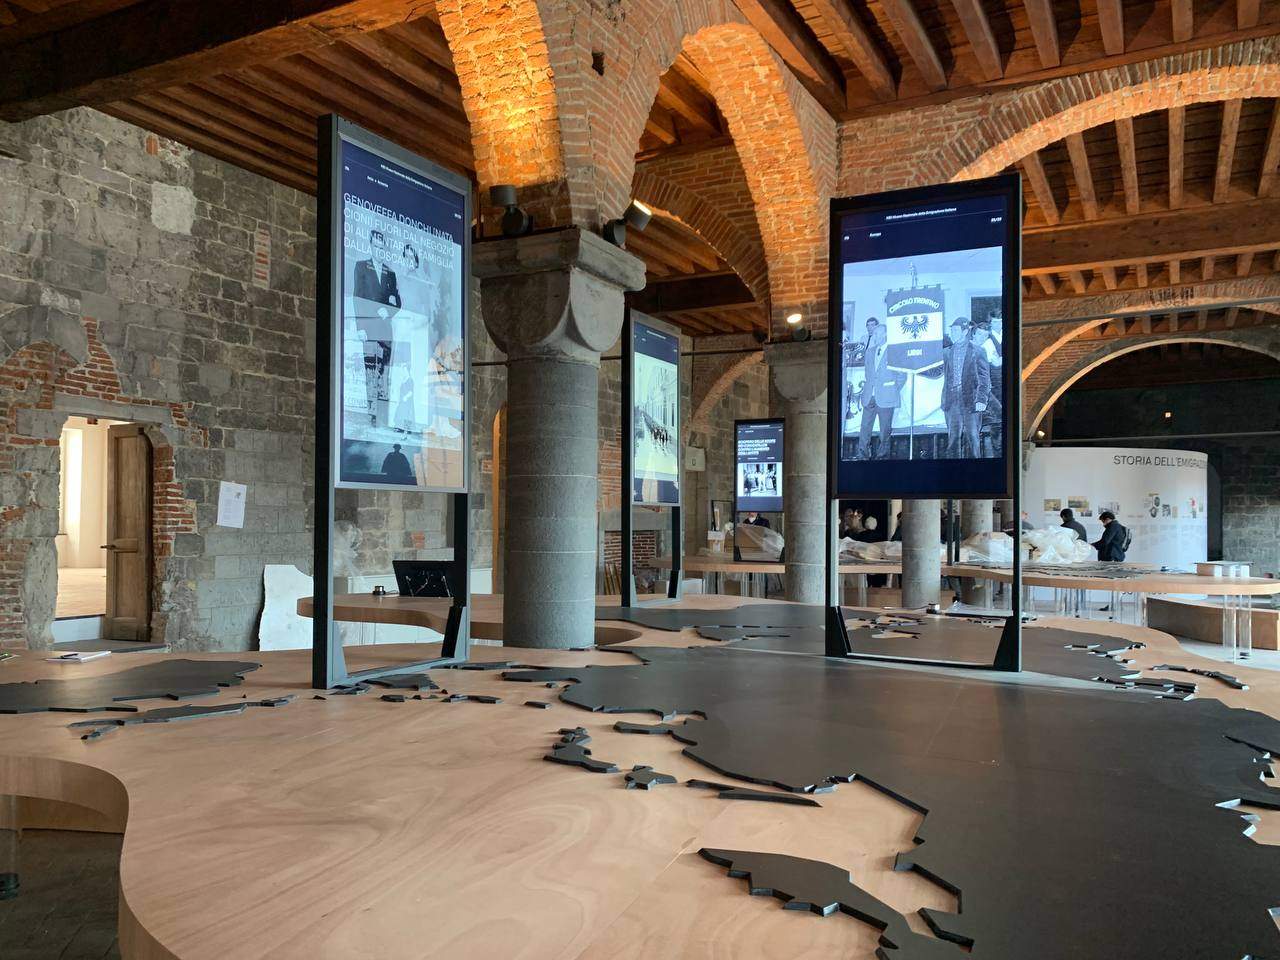 MEI - National Museum of Italian Emigration inaugurated in Genoa.